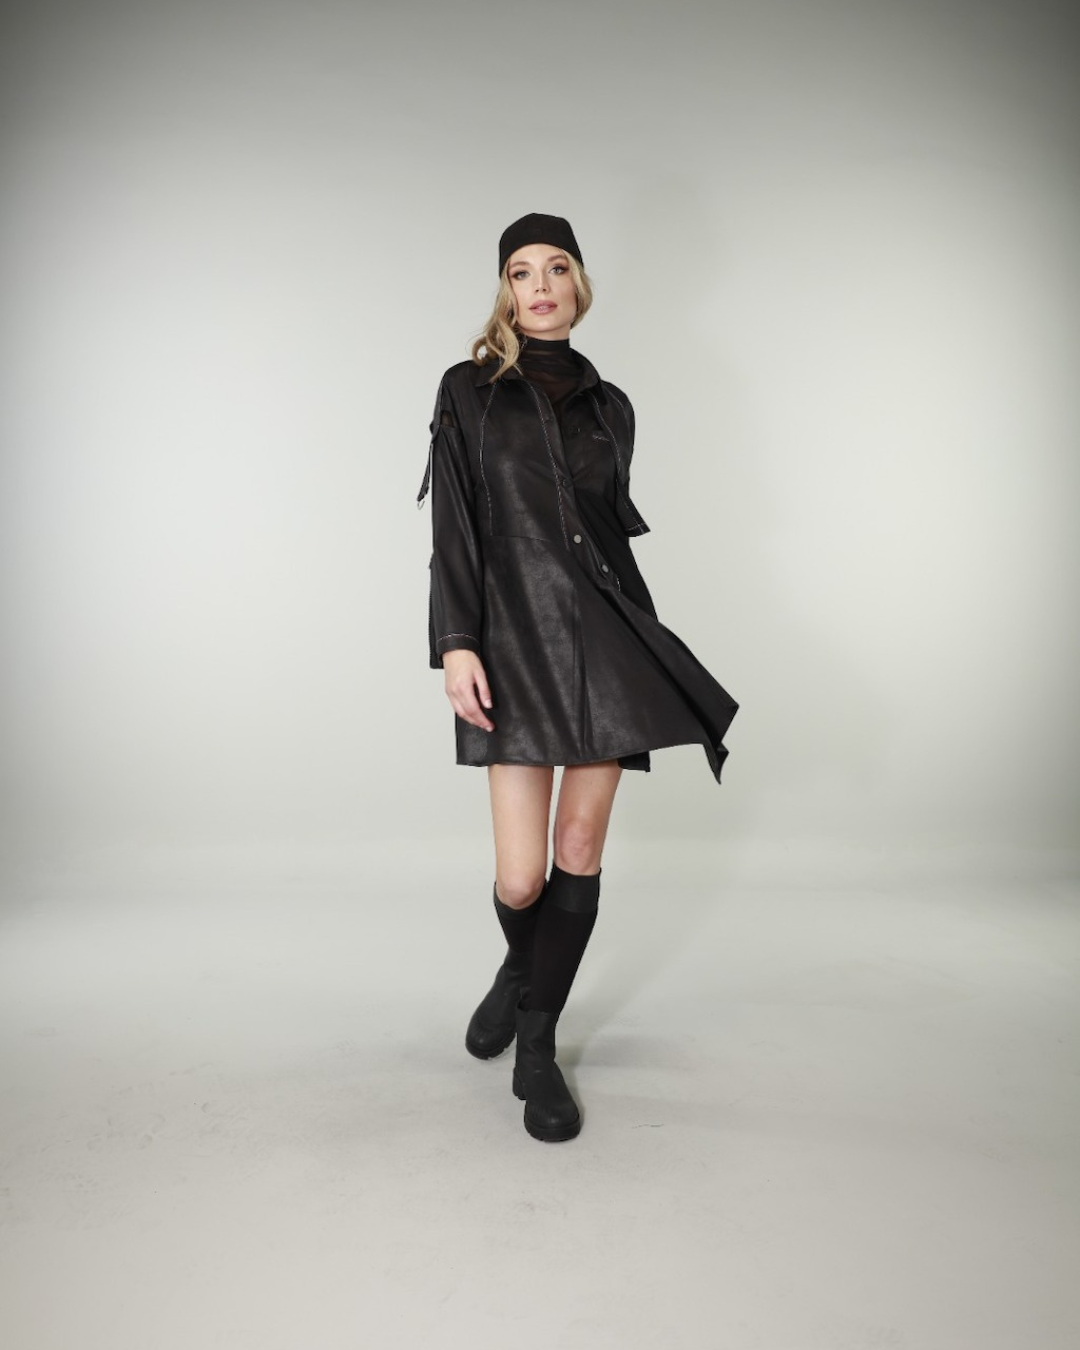 Fashion Forward Jacket Dress Design 23059D - Vegan Leather Black